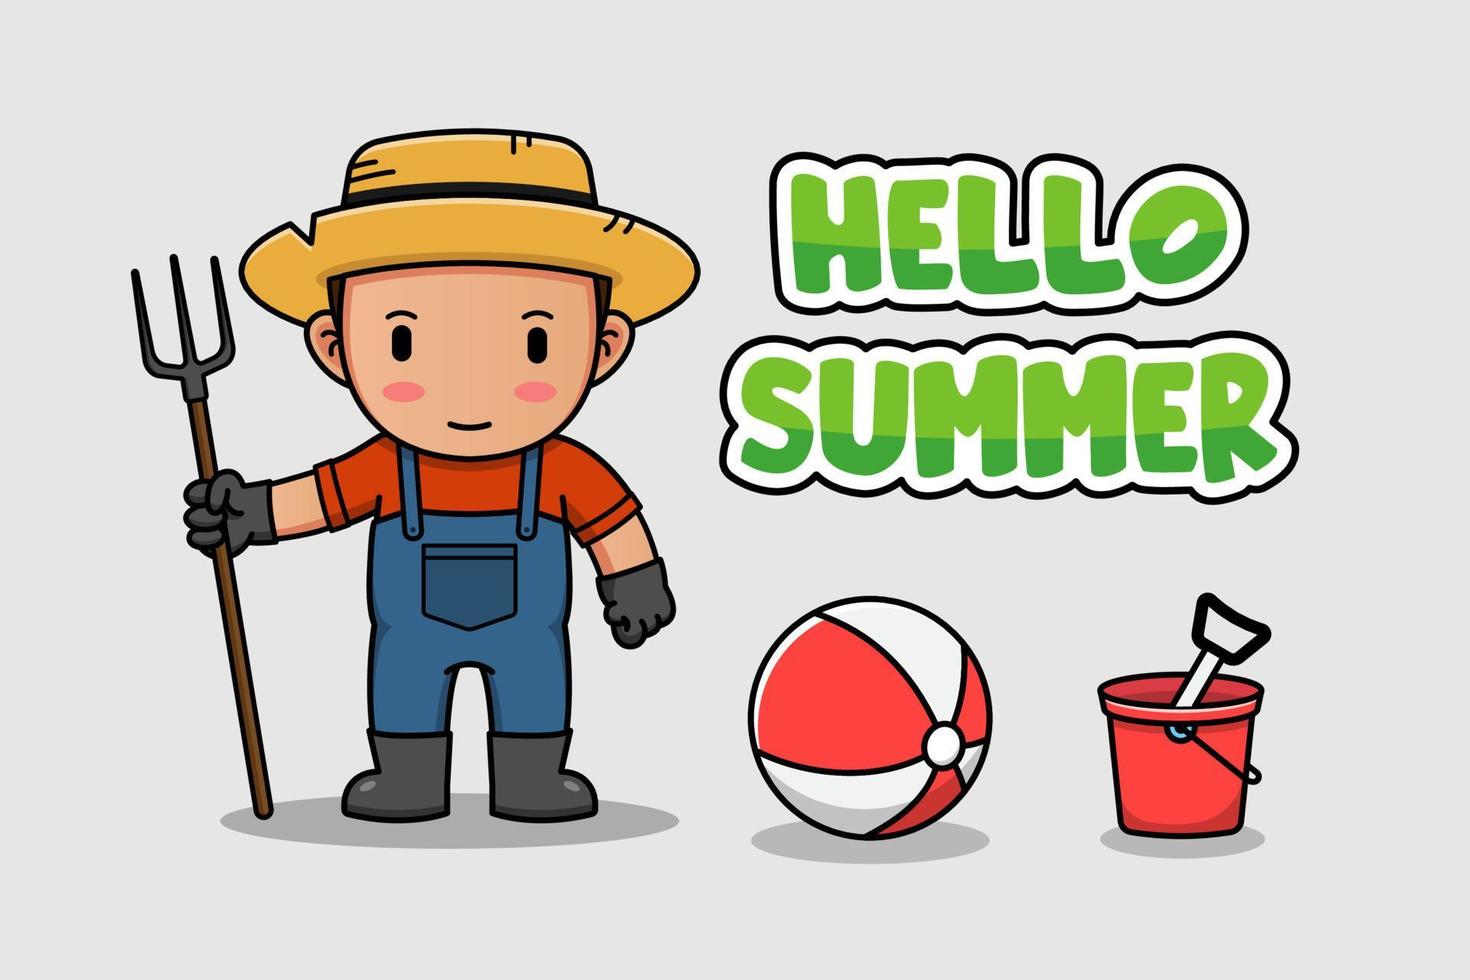 Cute farmer with hello summer banner vector